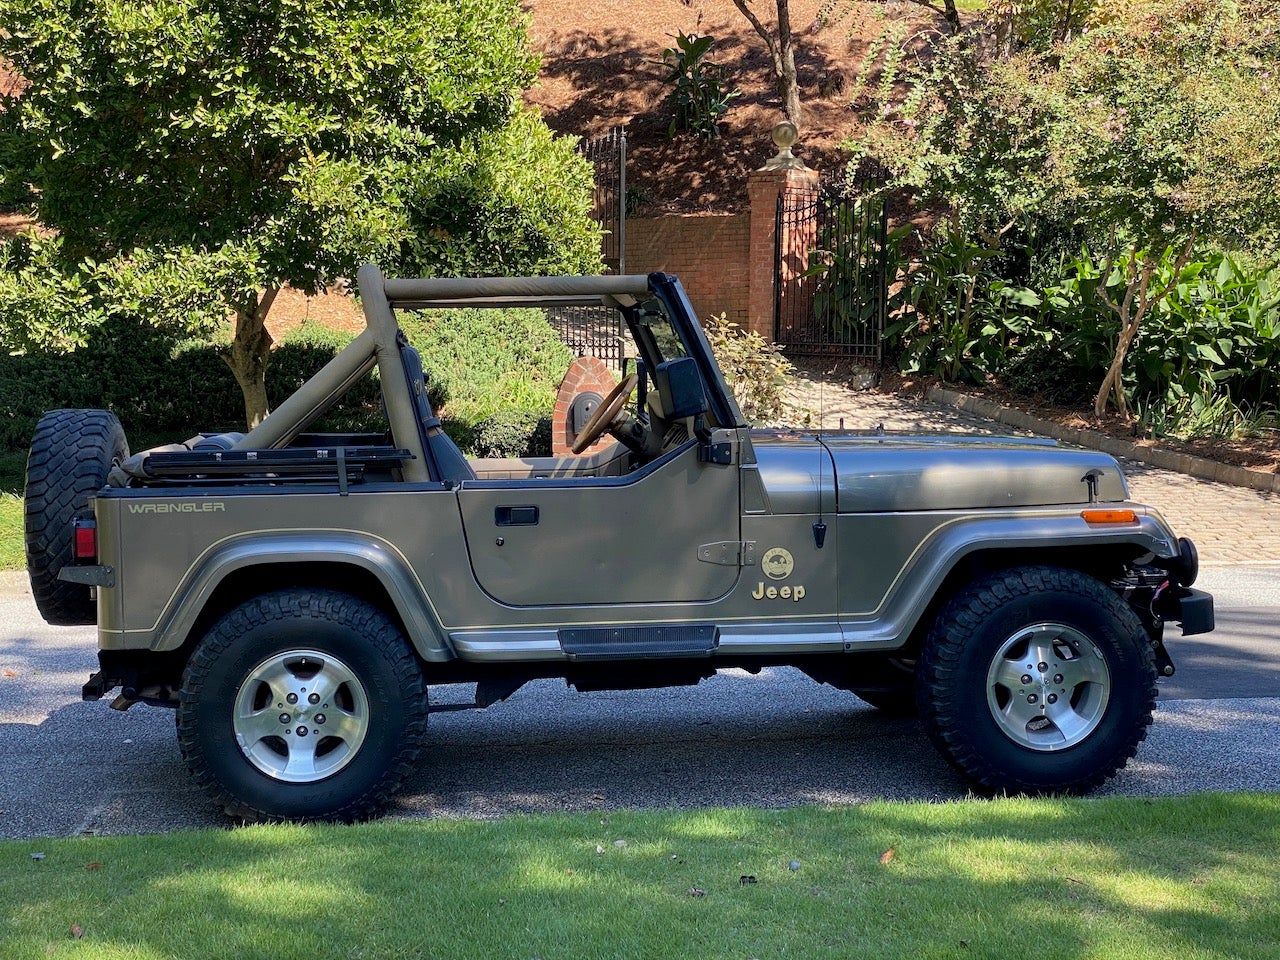 New Purchase - 91 Wrangler Sahara | Jeep Wrangler Forum